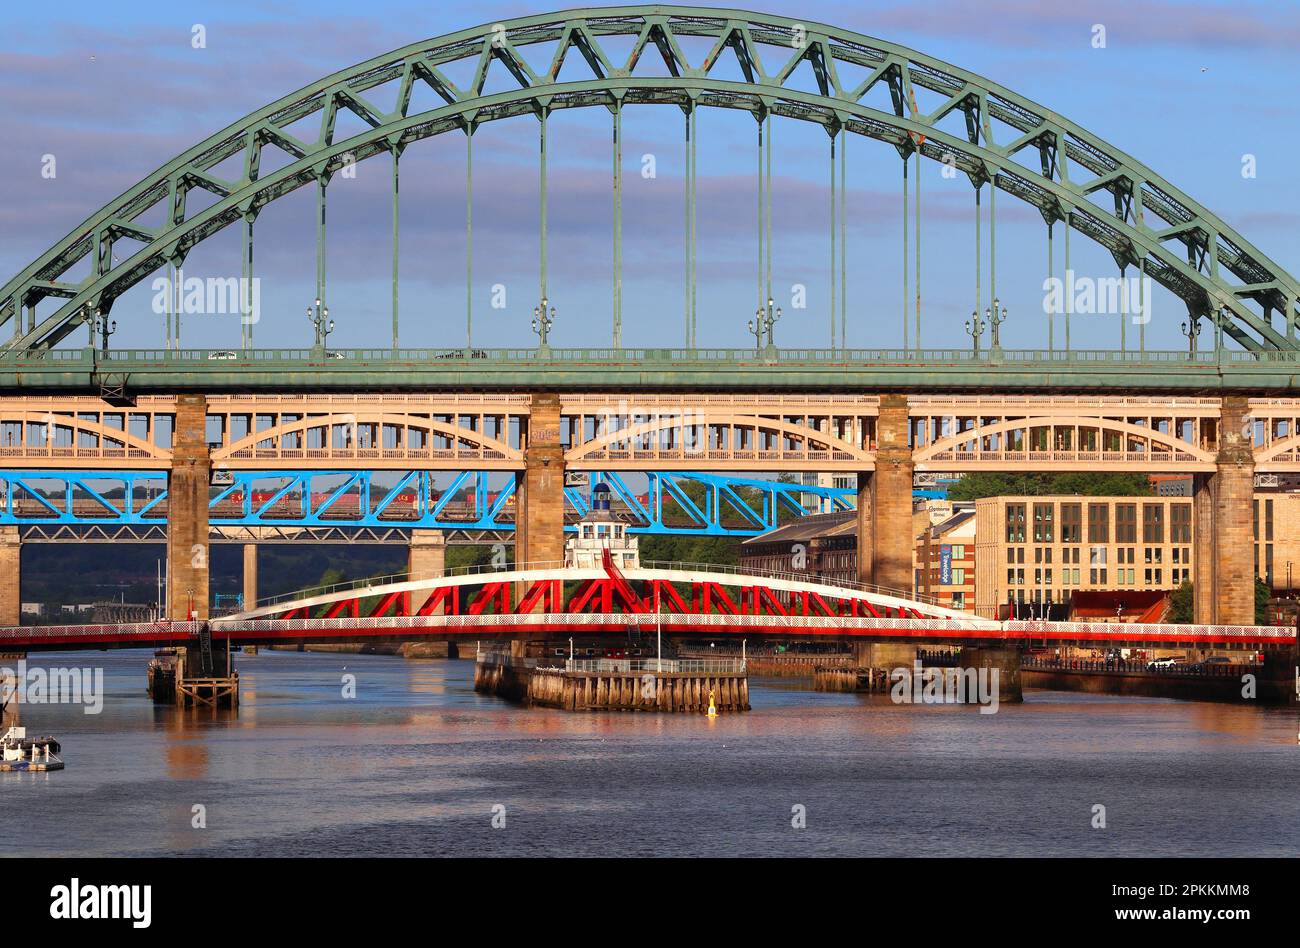 Ponts au-dessus de la rivière Tyne, Newcastle-upon-Tyne, Tyne and Wear, Angleterre, Royaume-Uni, Europe Banque D'Images